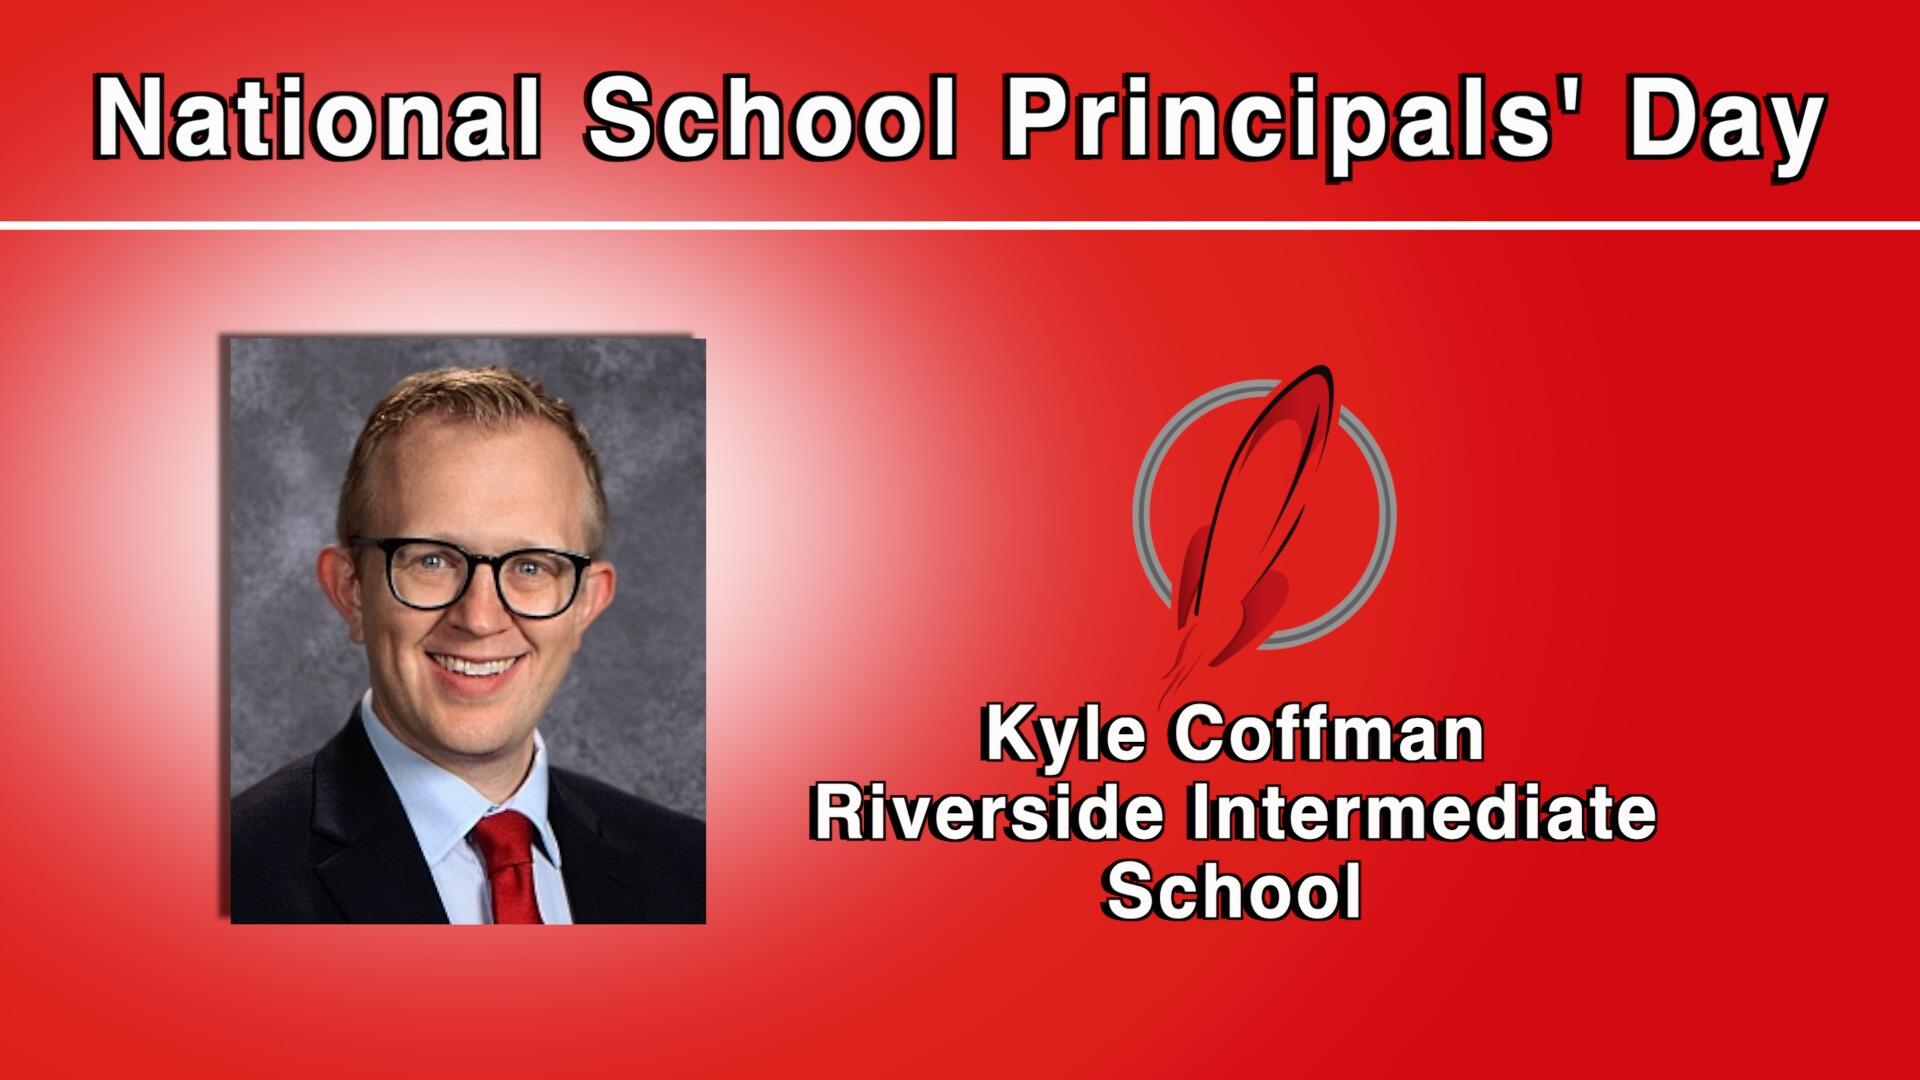 National School Principals' Day-Kyle Coffman-Riverside Intermediate School and logo